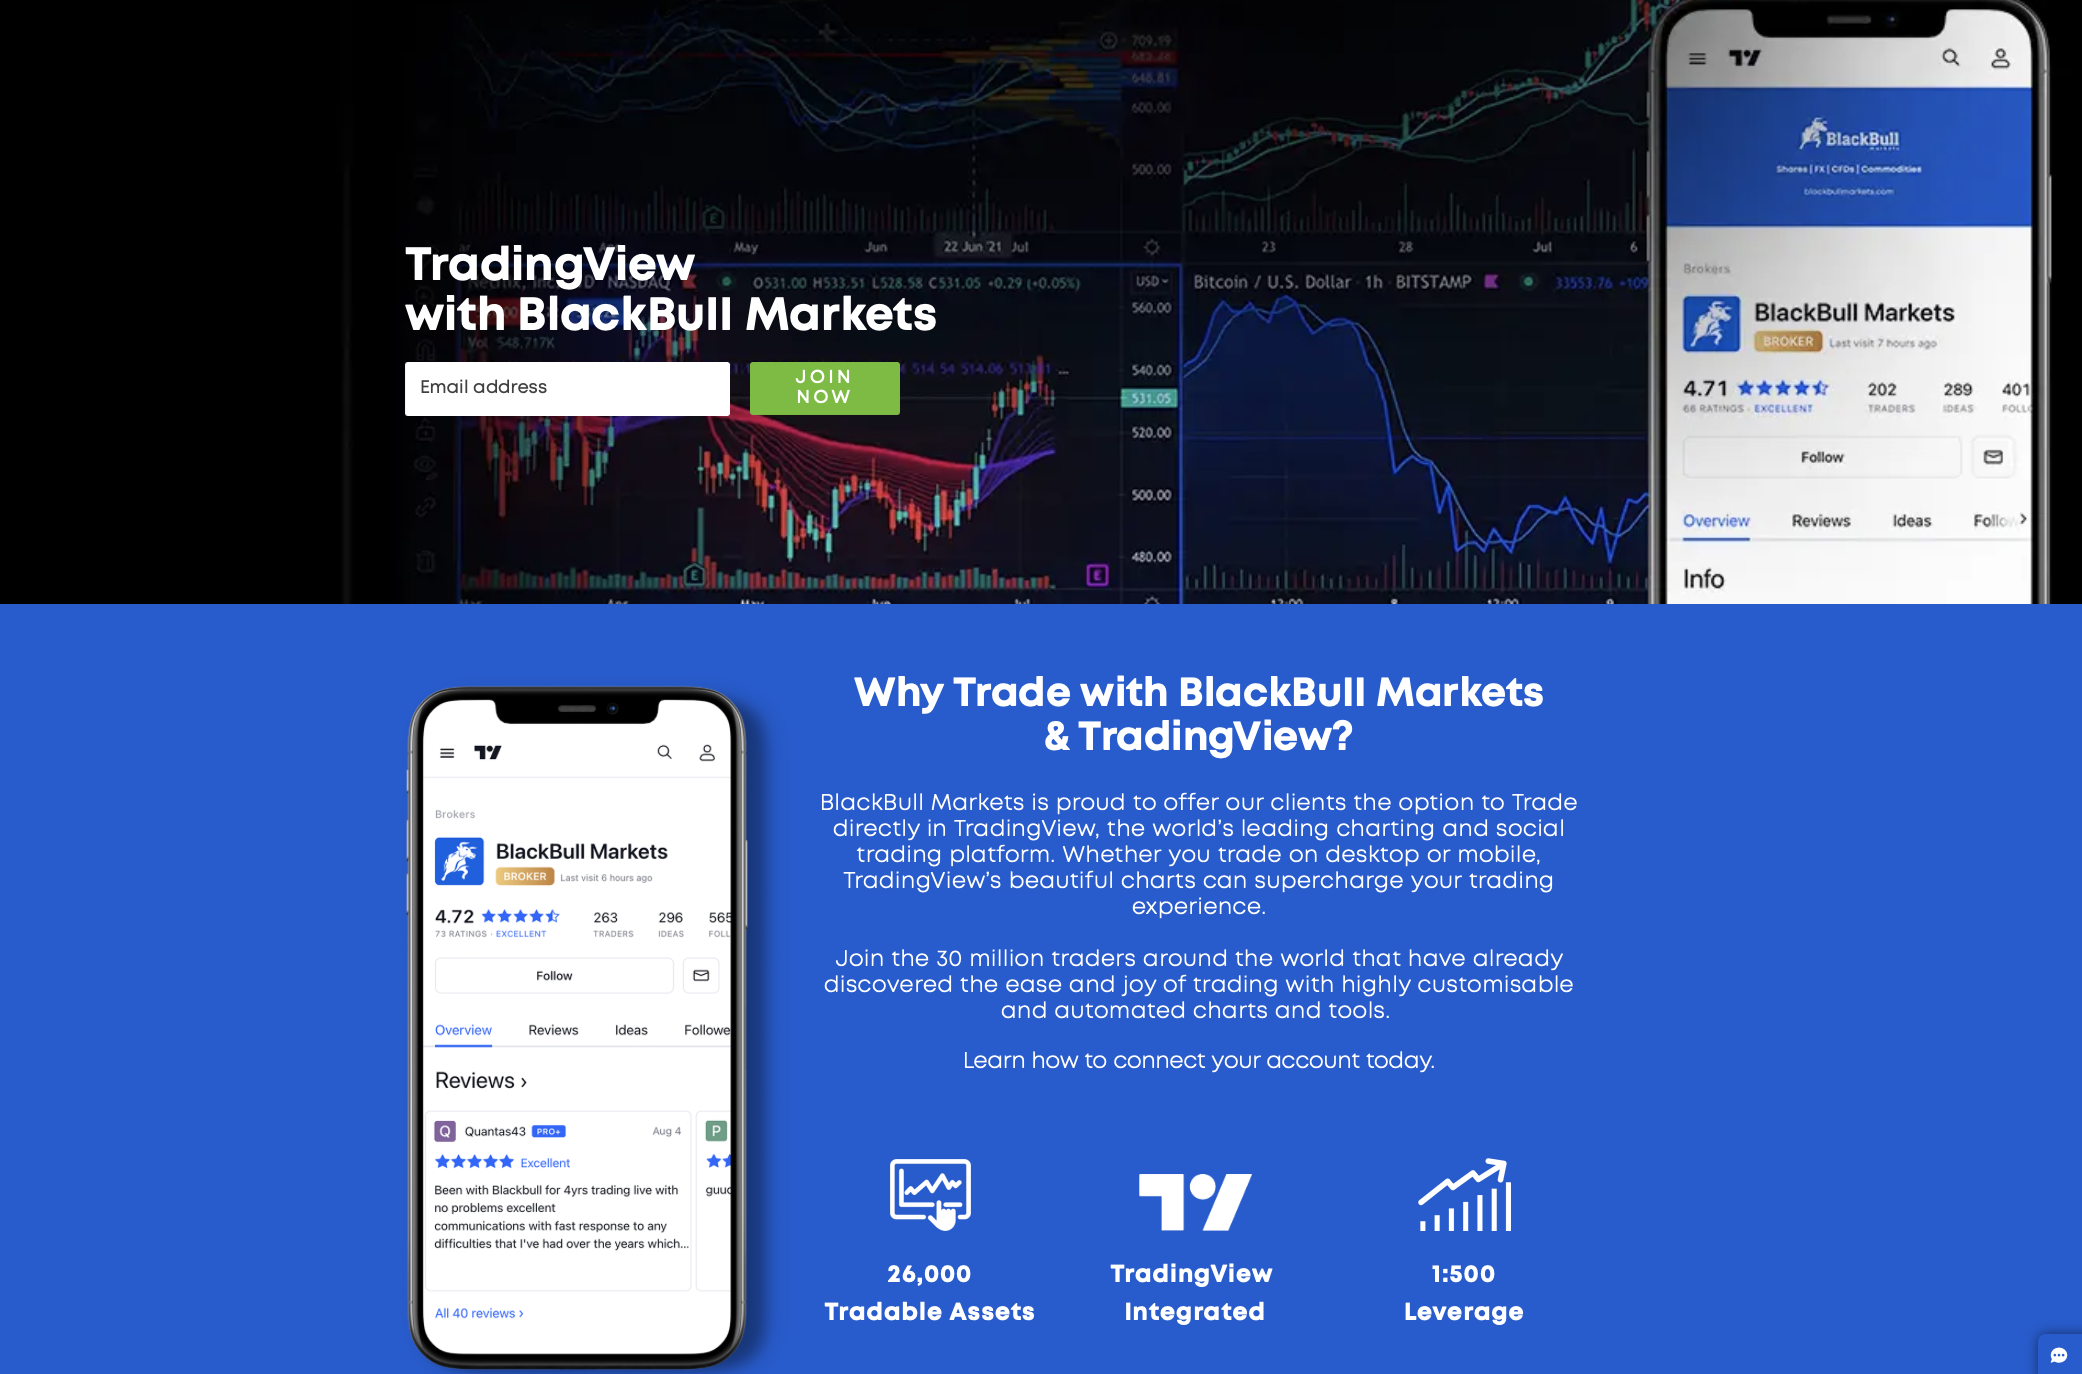 The BlackBull Markets TradingView demo account